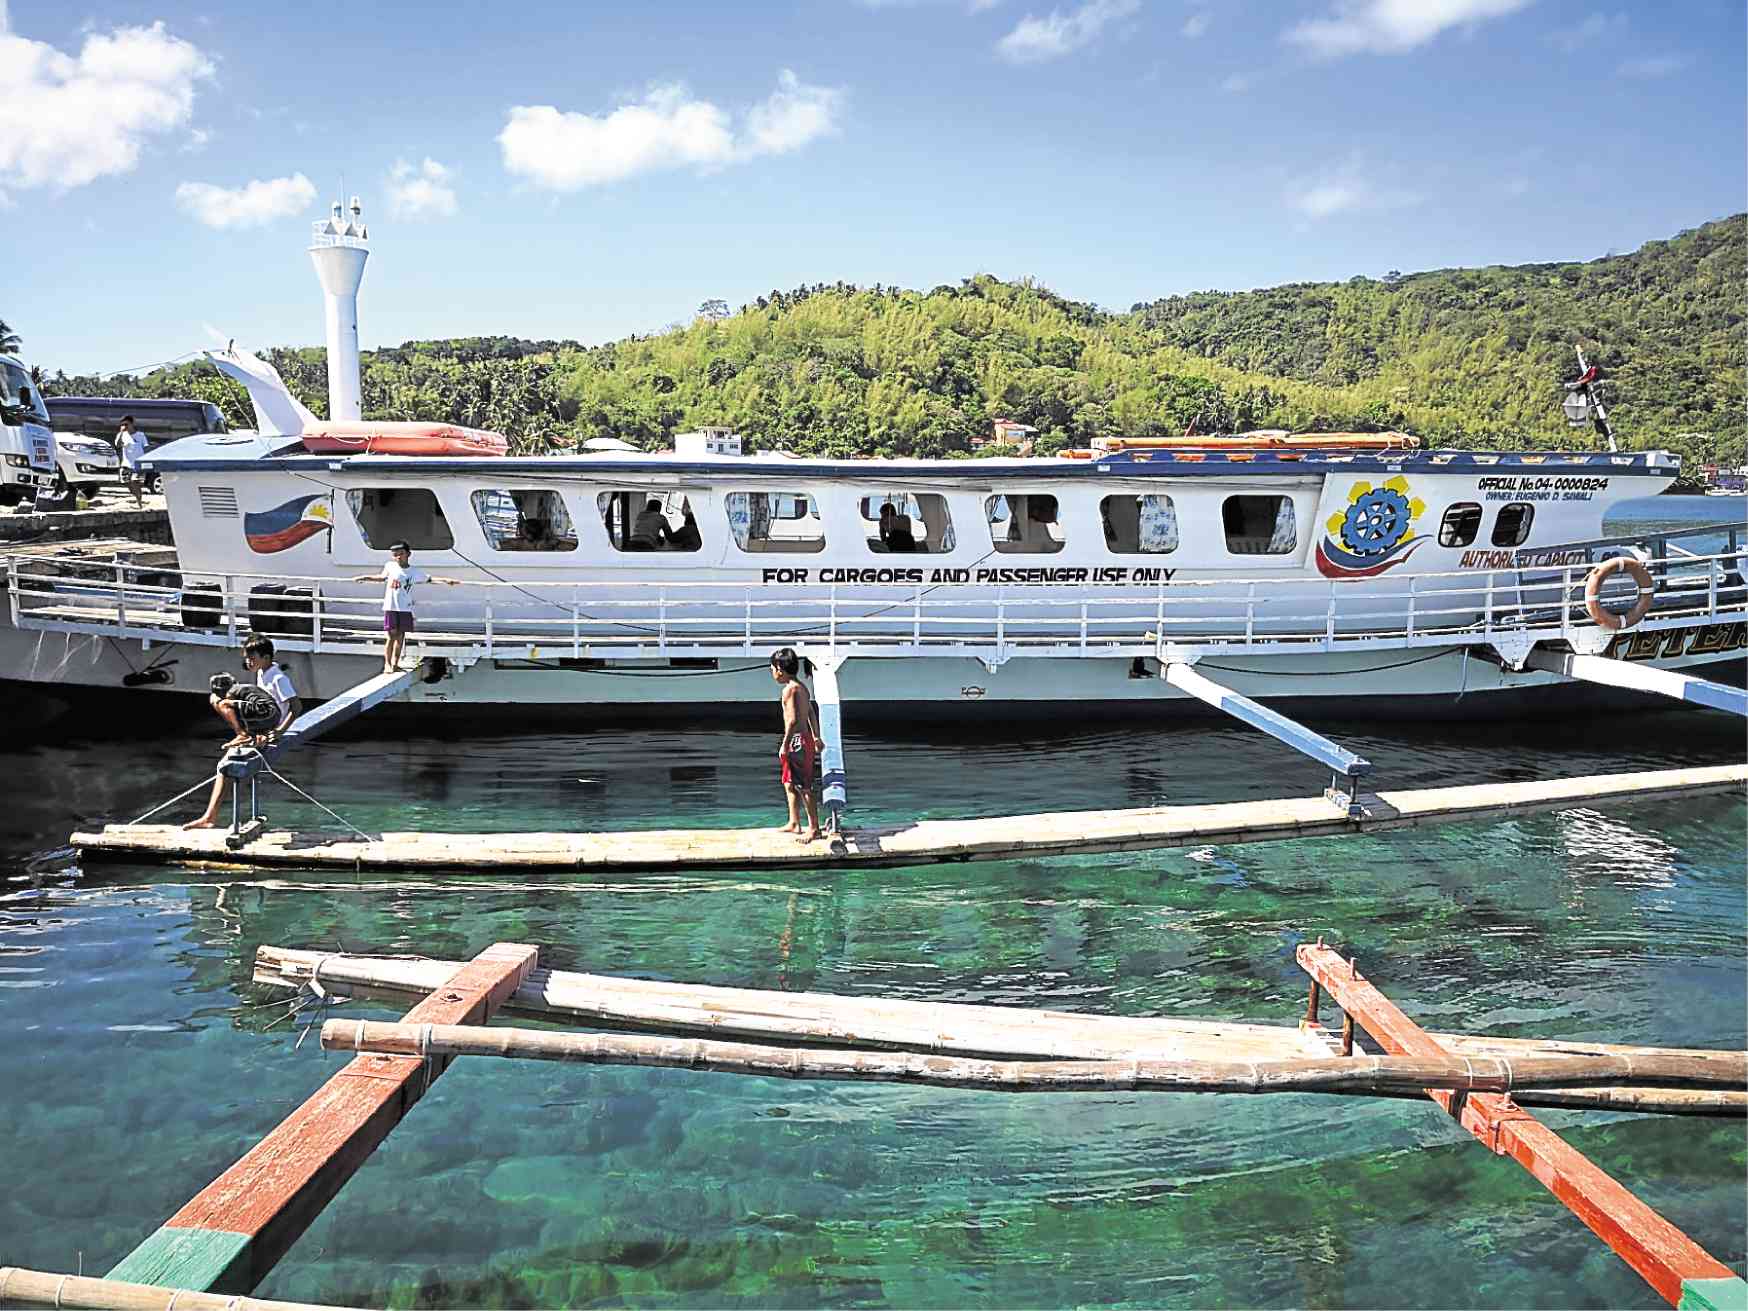 Calapan-Batangas trips via small vessels canceled